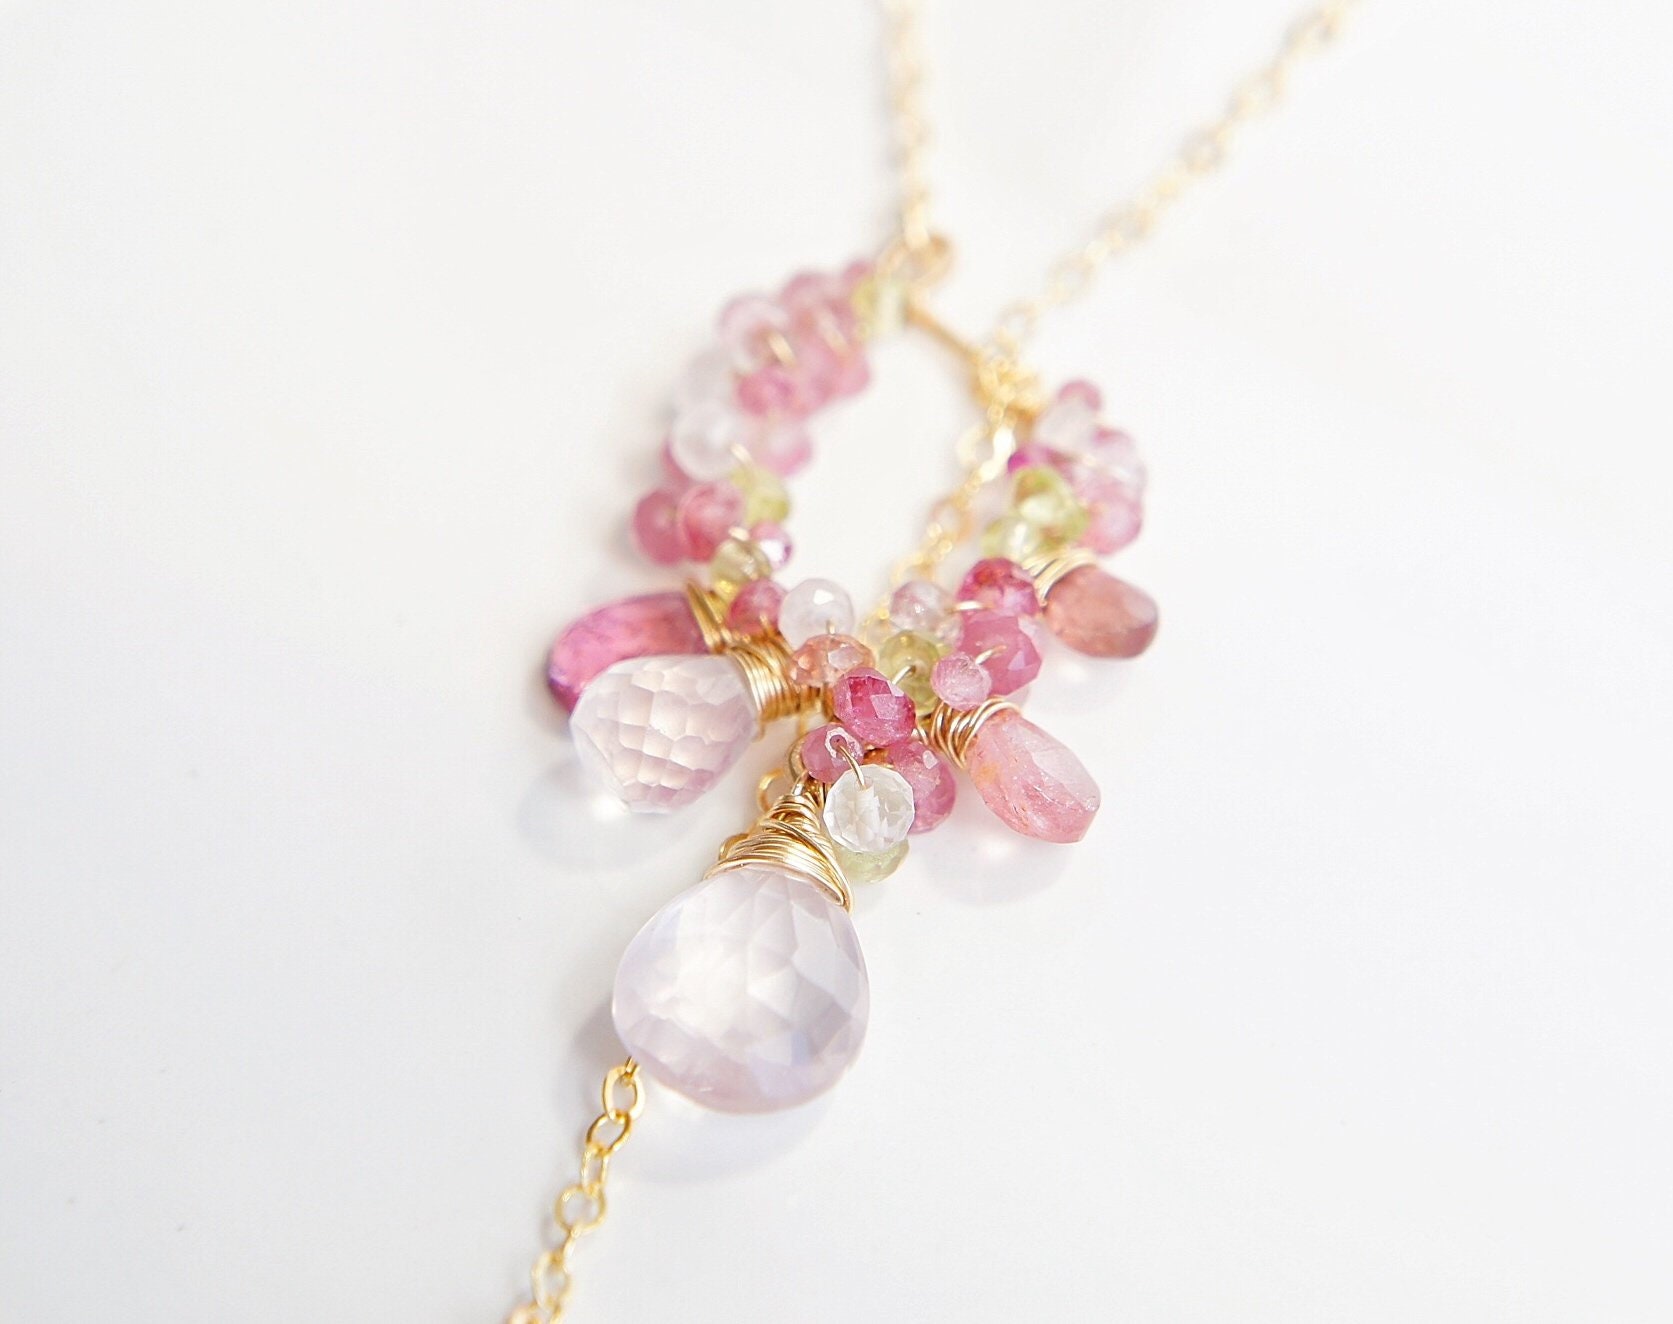 Pink Gemstones Lariat, Cherry Blossom Sakura Japanese Jewelry, Cluster Pendant Necklace, 14K Gold Filled